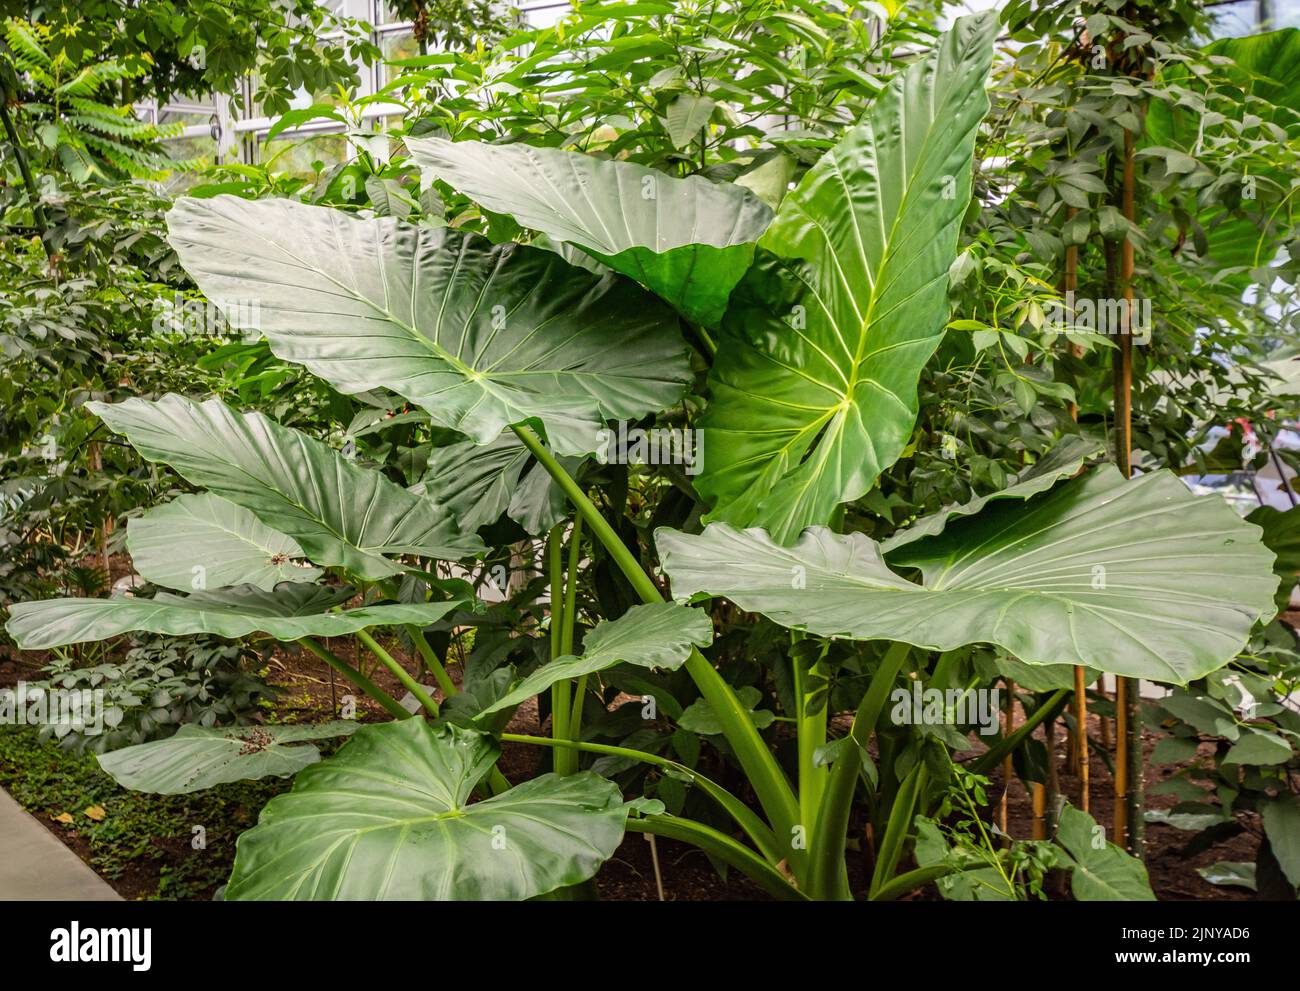 Taro, coco yam, ou Eddoe (Colocasia esculenta), feuilles en serre dans les jardins botaniques Banque D'Images